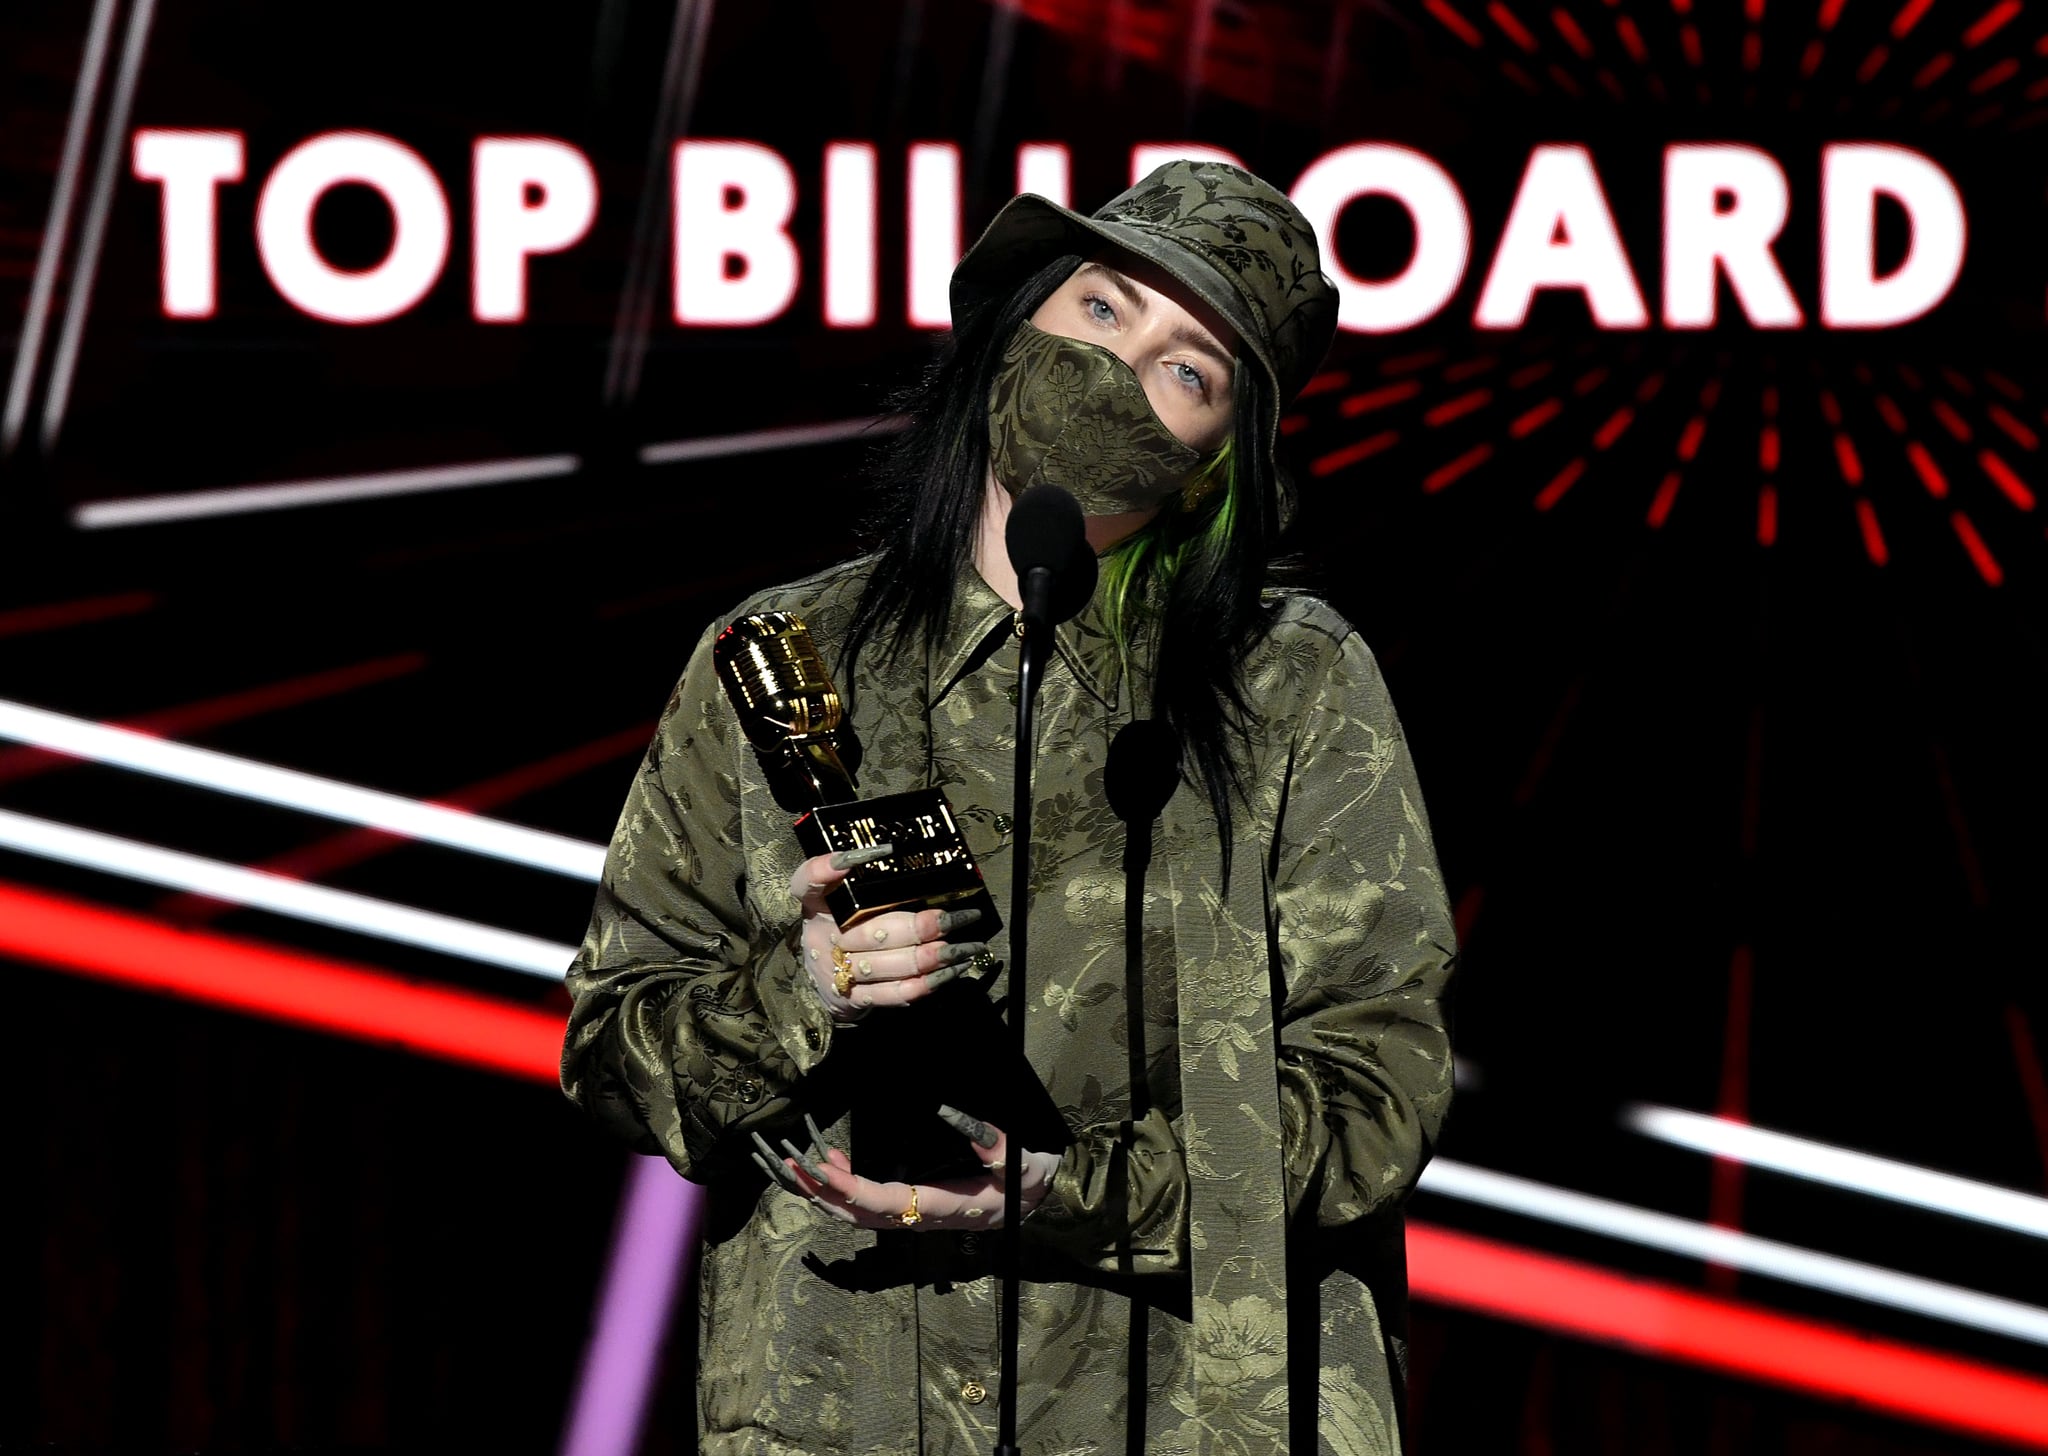 billie-eilish-outfit-at-billboard-music-awards-2020.jpg